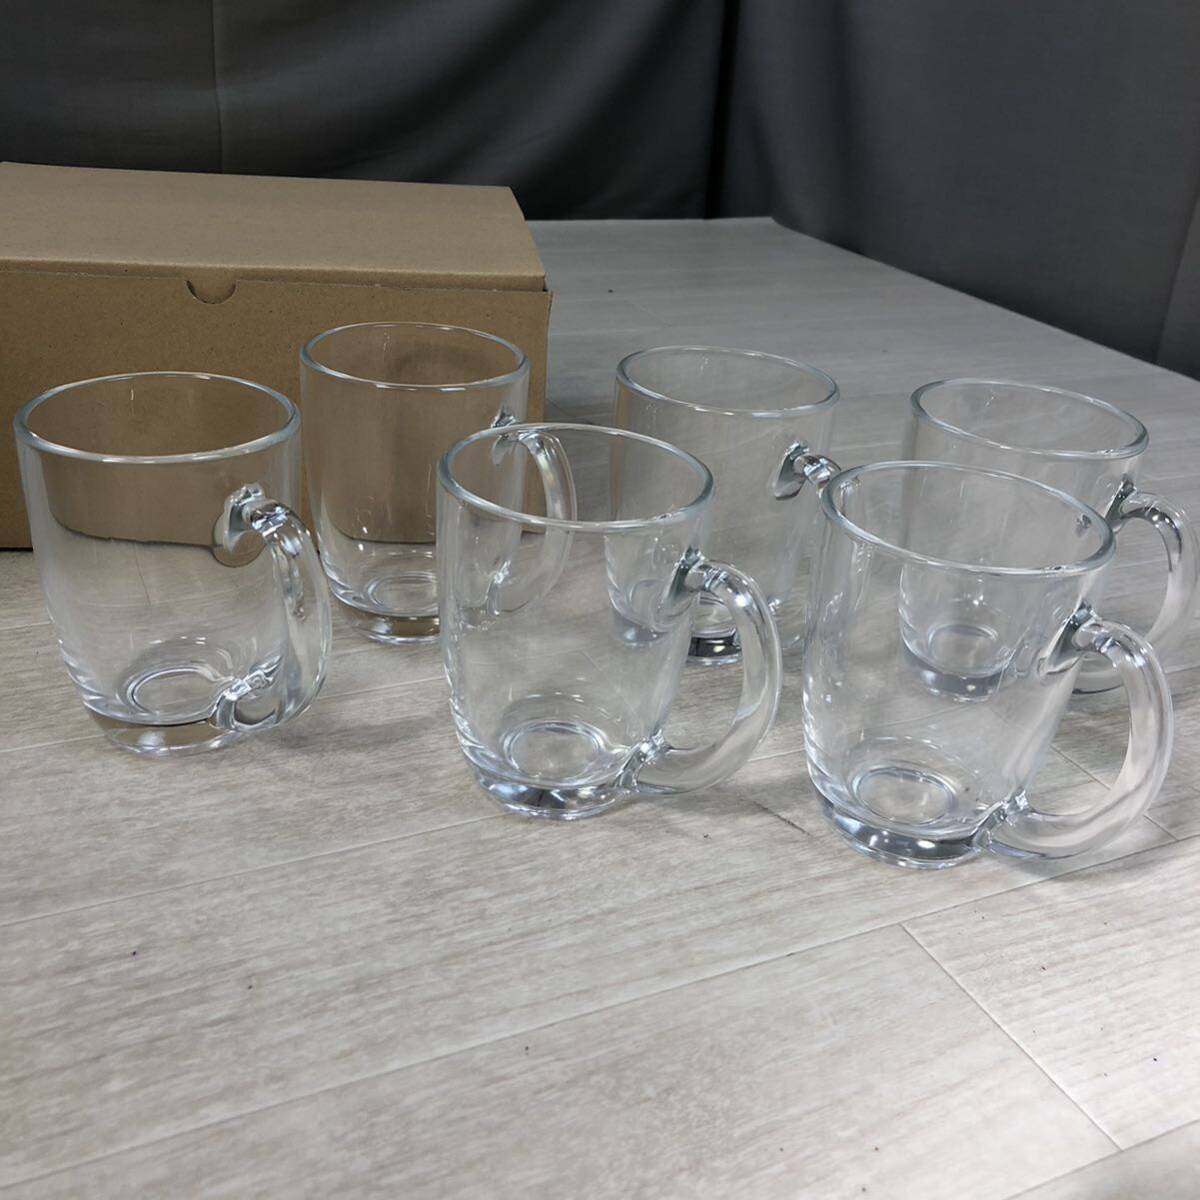 O664] glass Cafe glass heat-resisting glass hot glass mug heat-resisting glass heat-resisting cup glass jug beer jug 